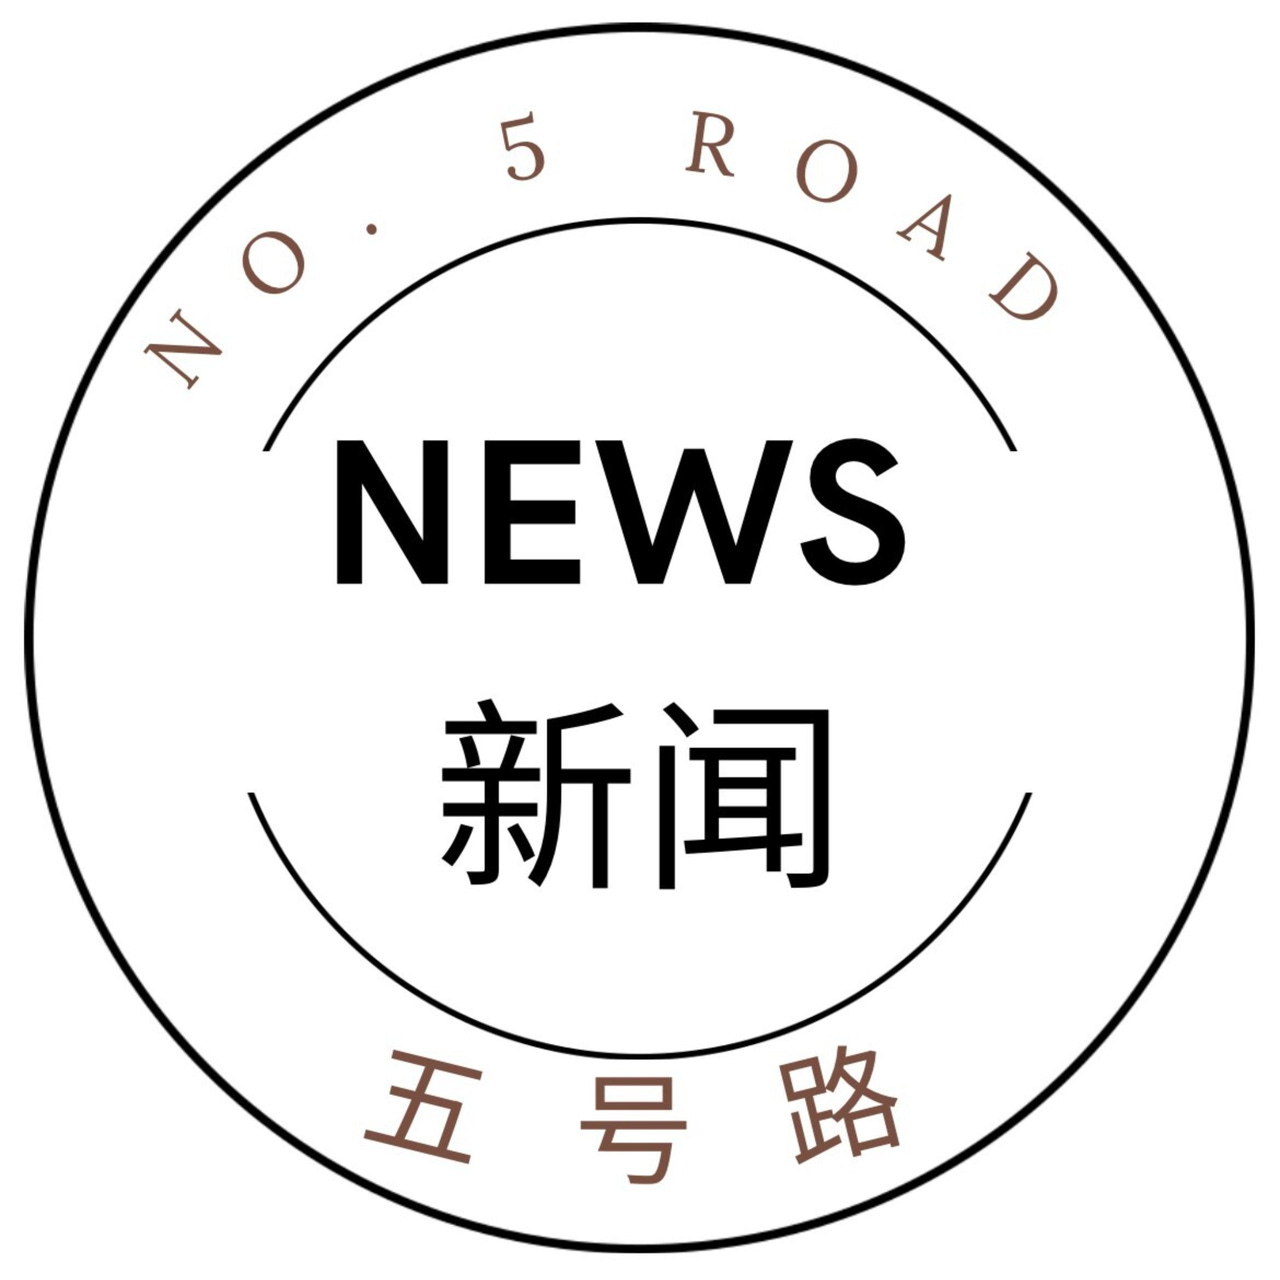 五号路新闻， No. 5 Road News